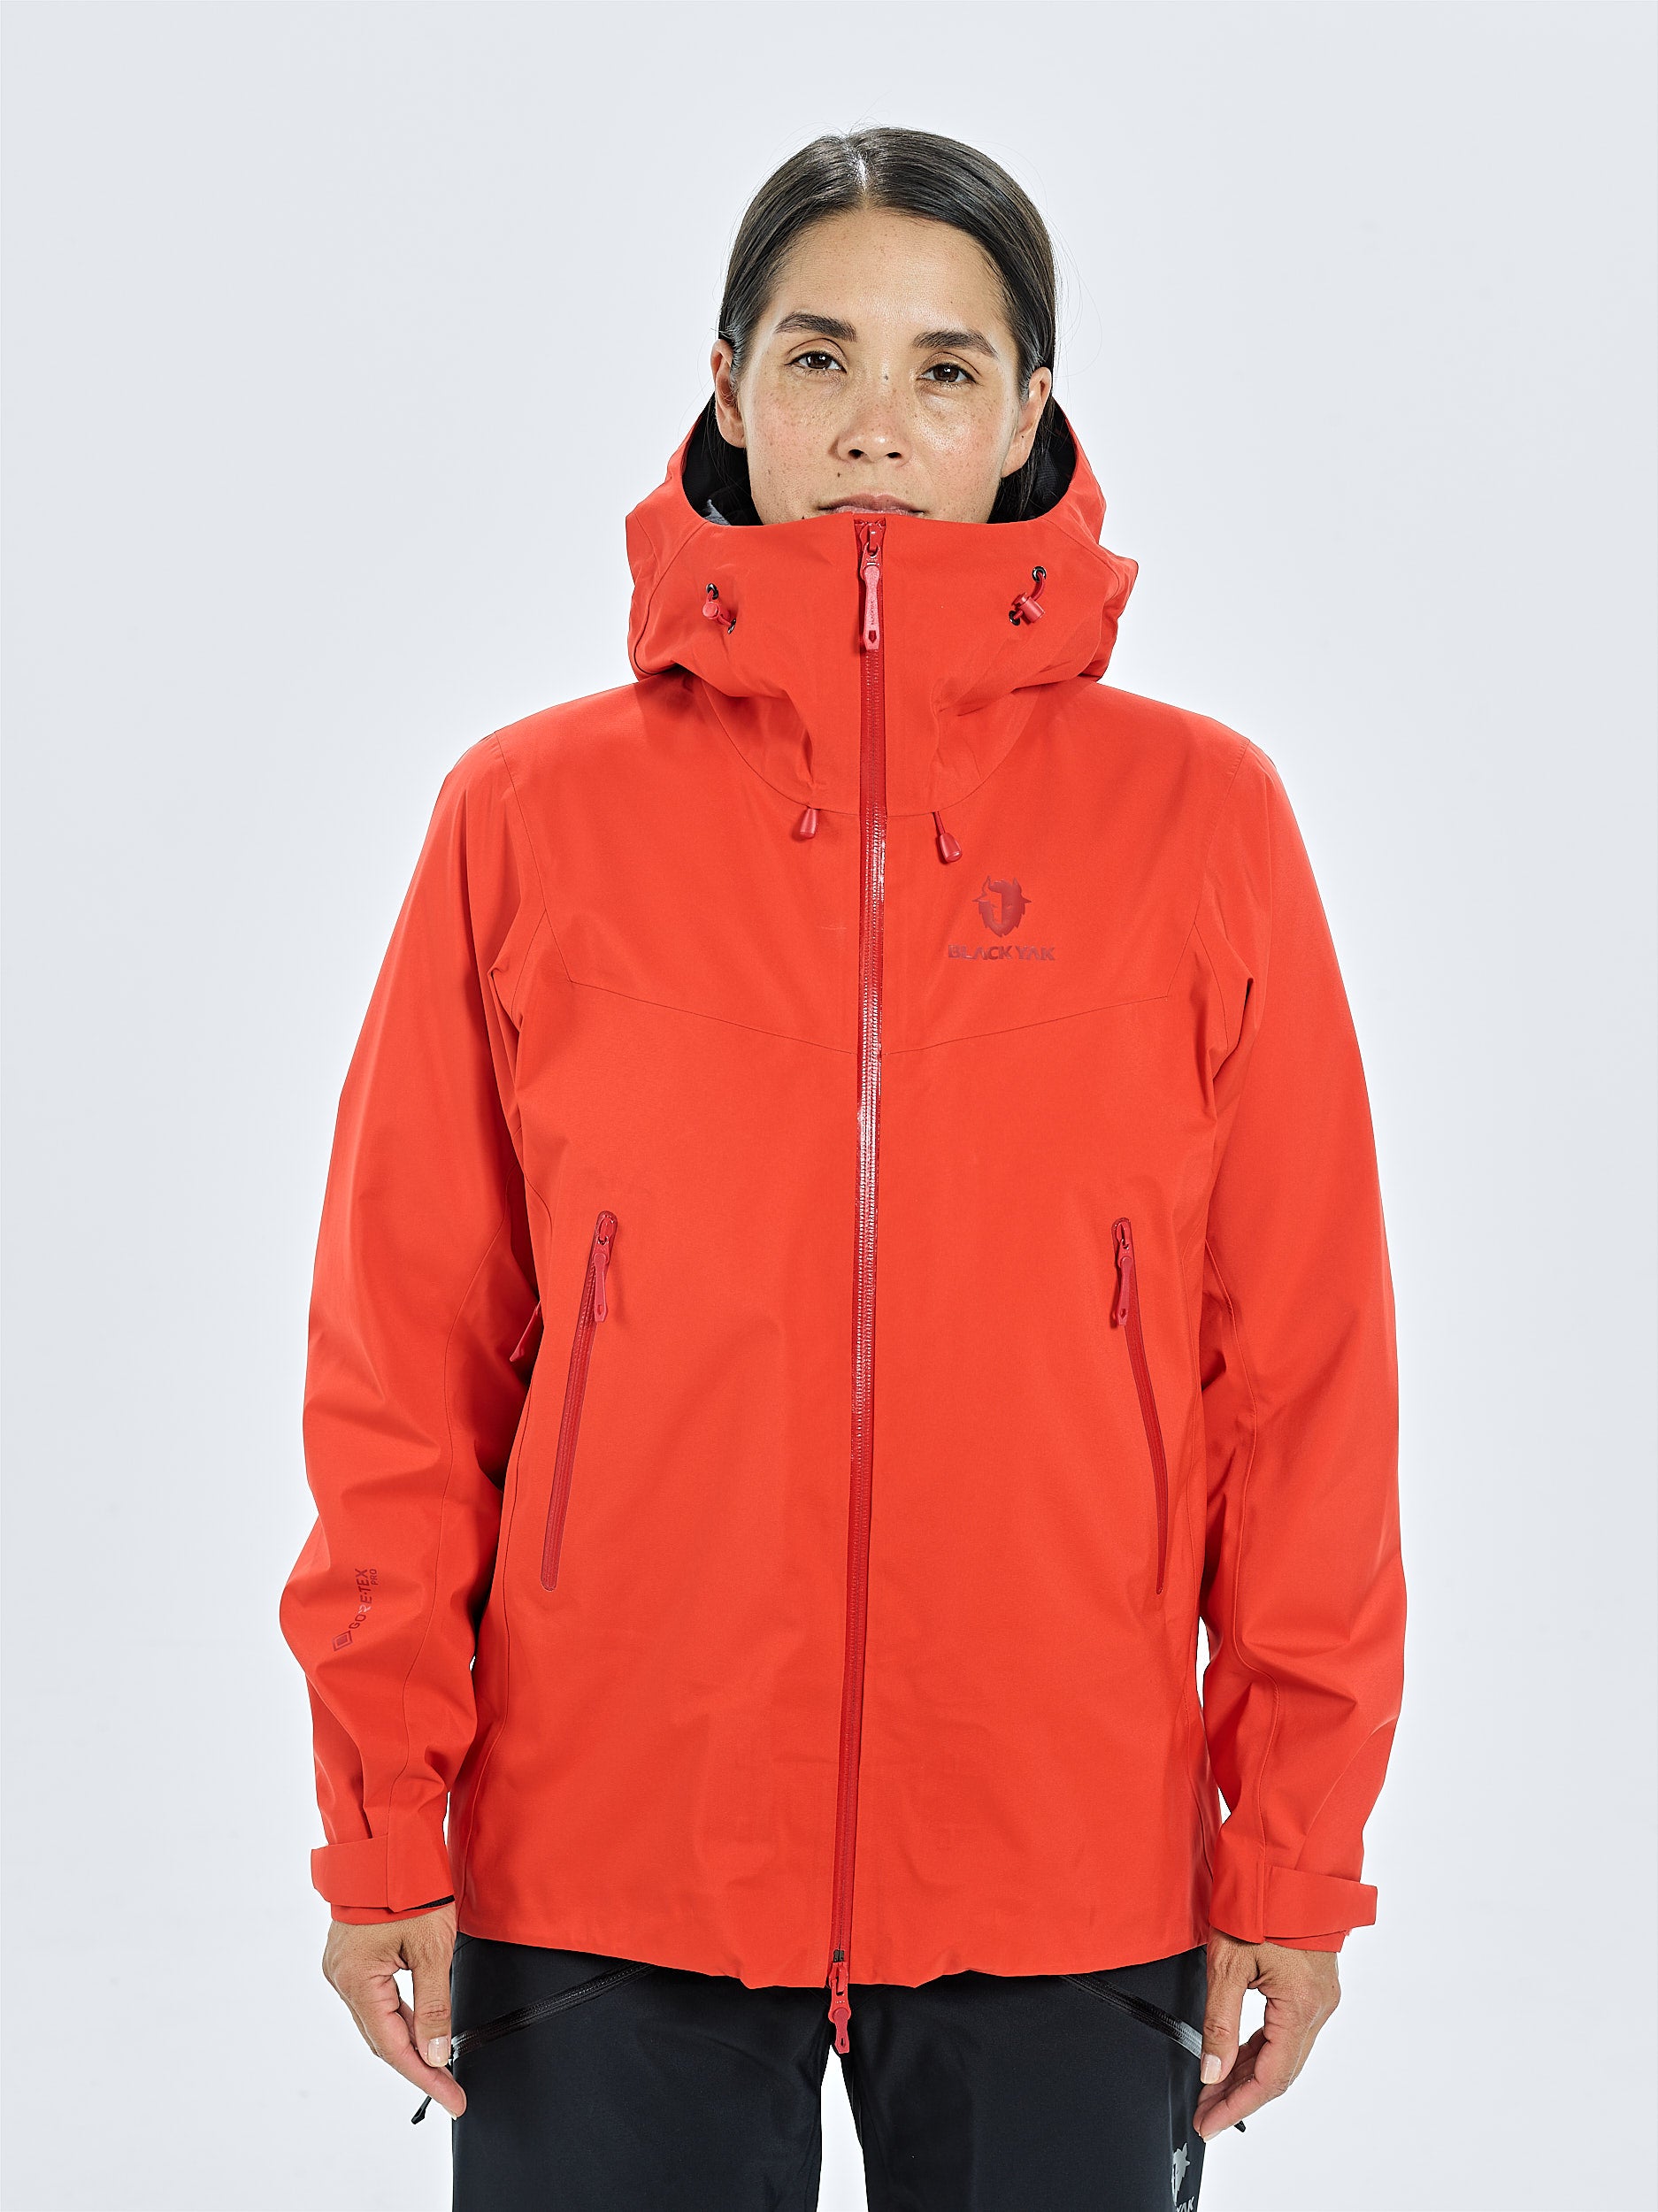 Montane Womens Alpine Pro GORE-TEX Outdoor Jacket Top Navy Blue Sports  Outdoors